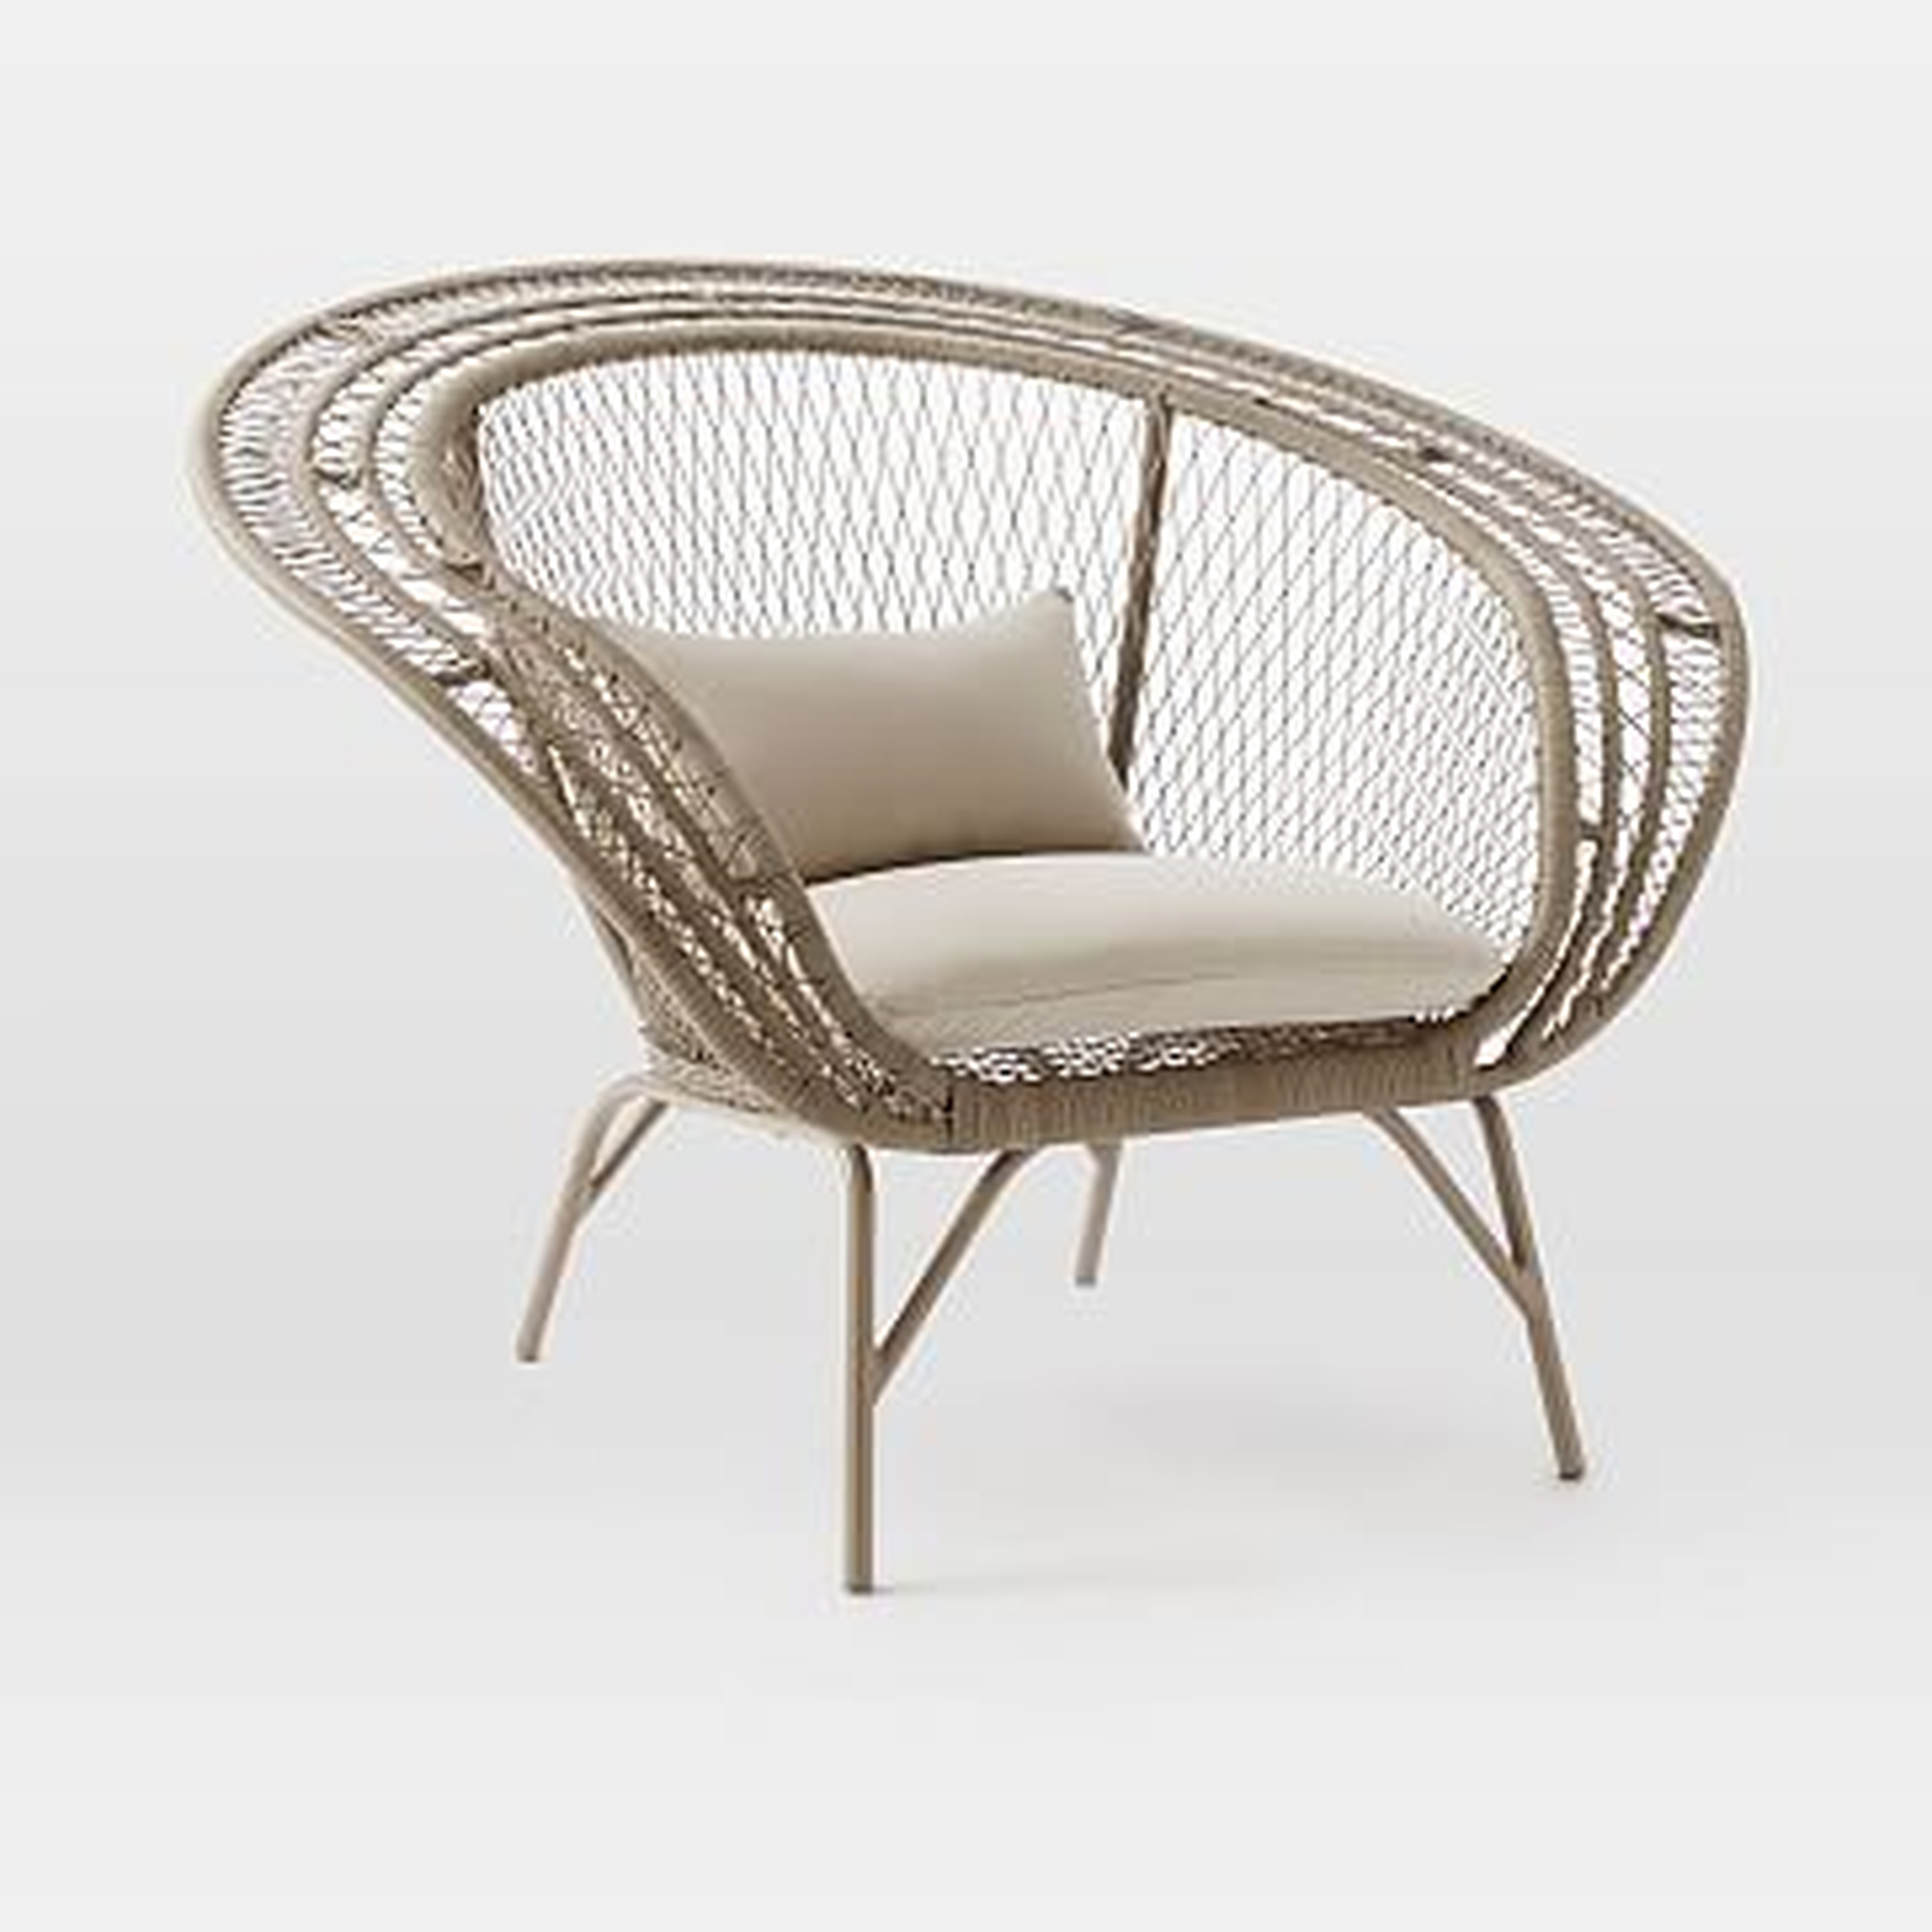 Modern Peacock Chair, Stone / Cement - West Elm